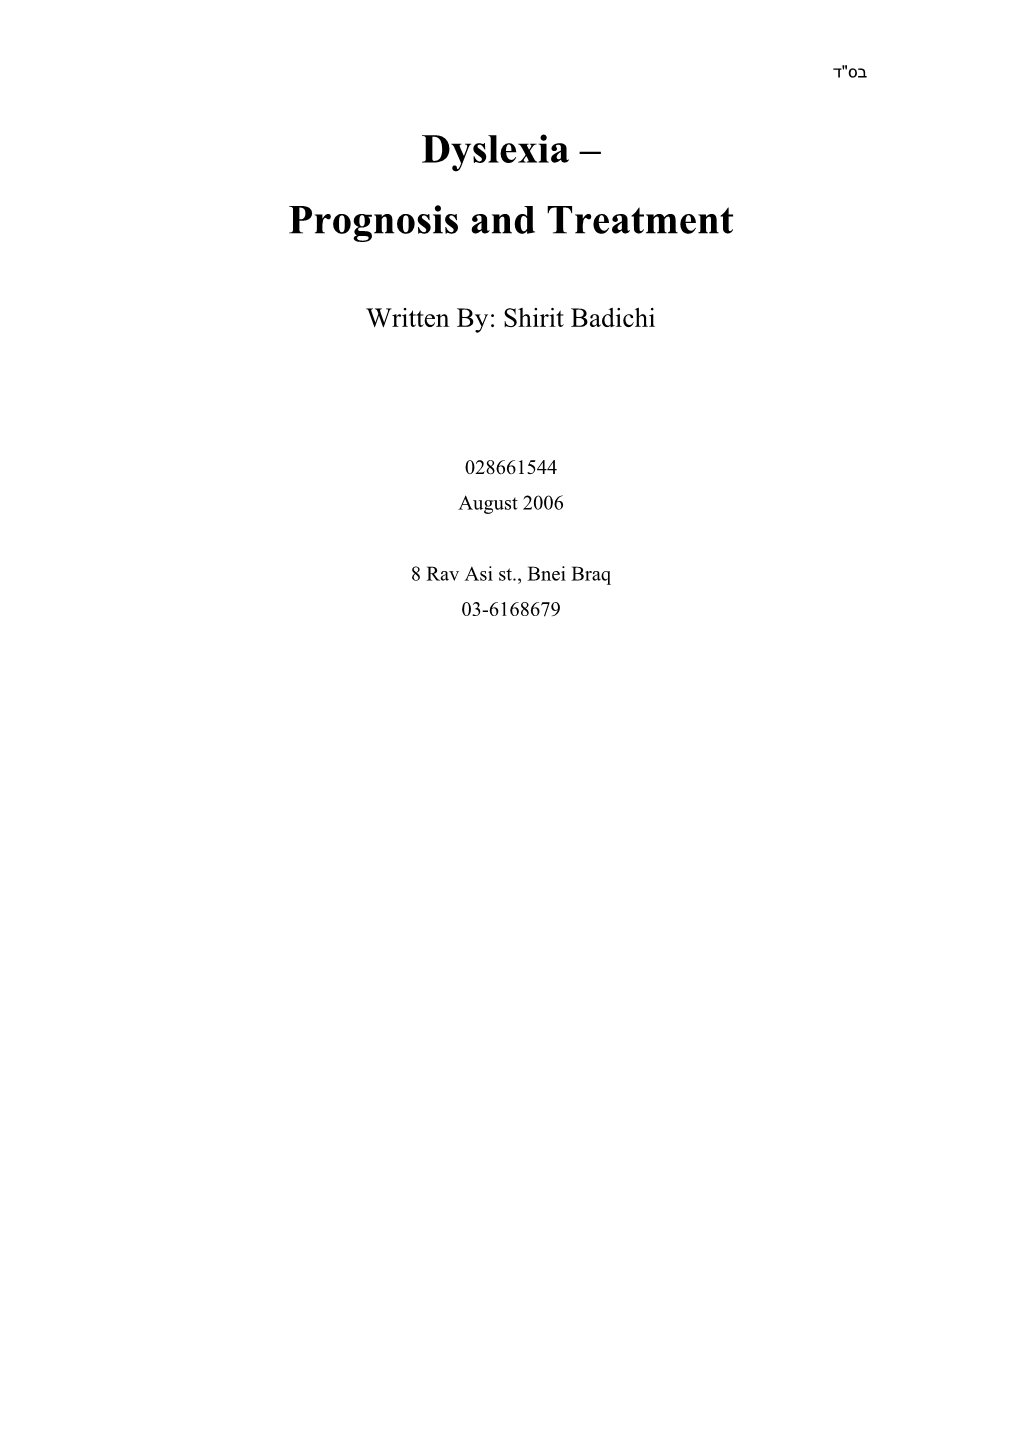 Prognosis and Treatment